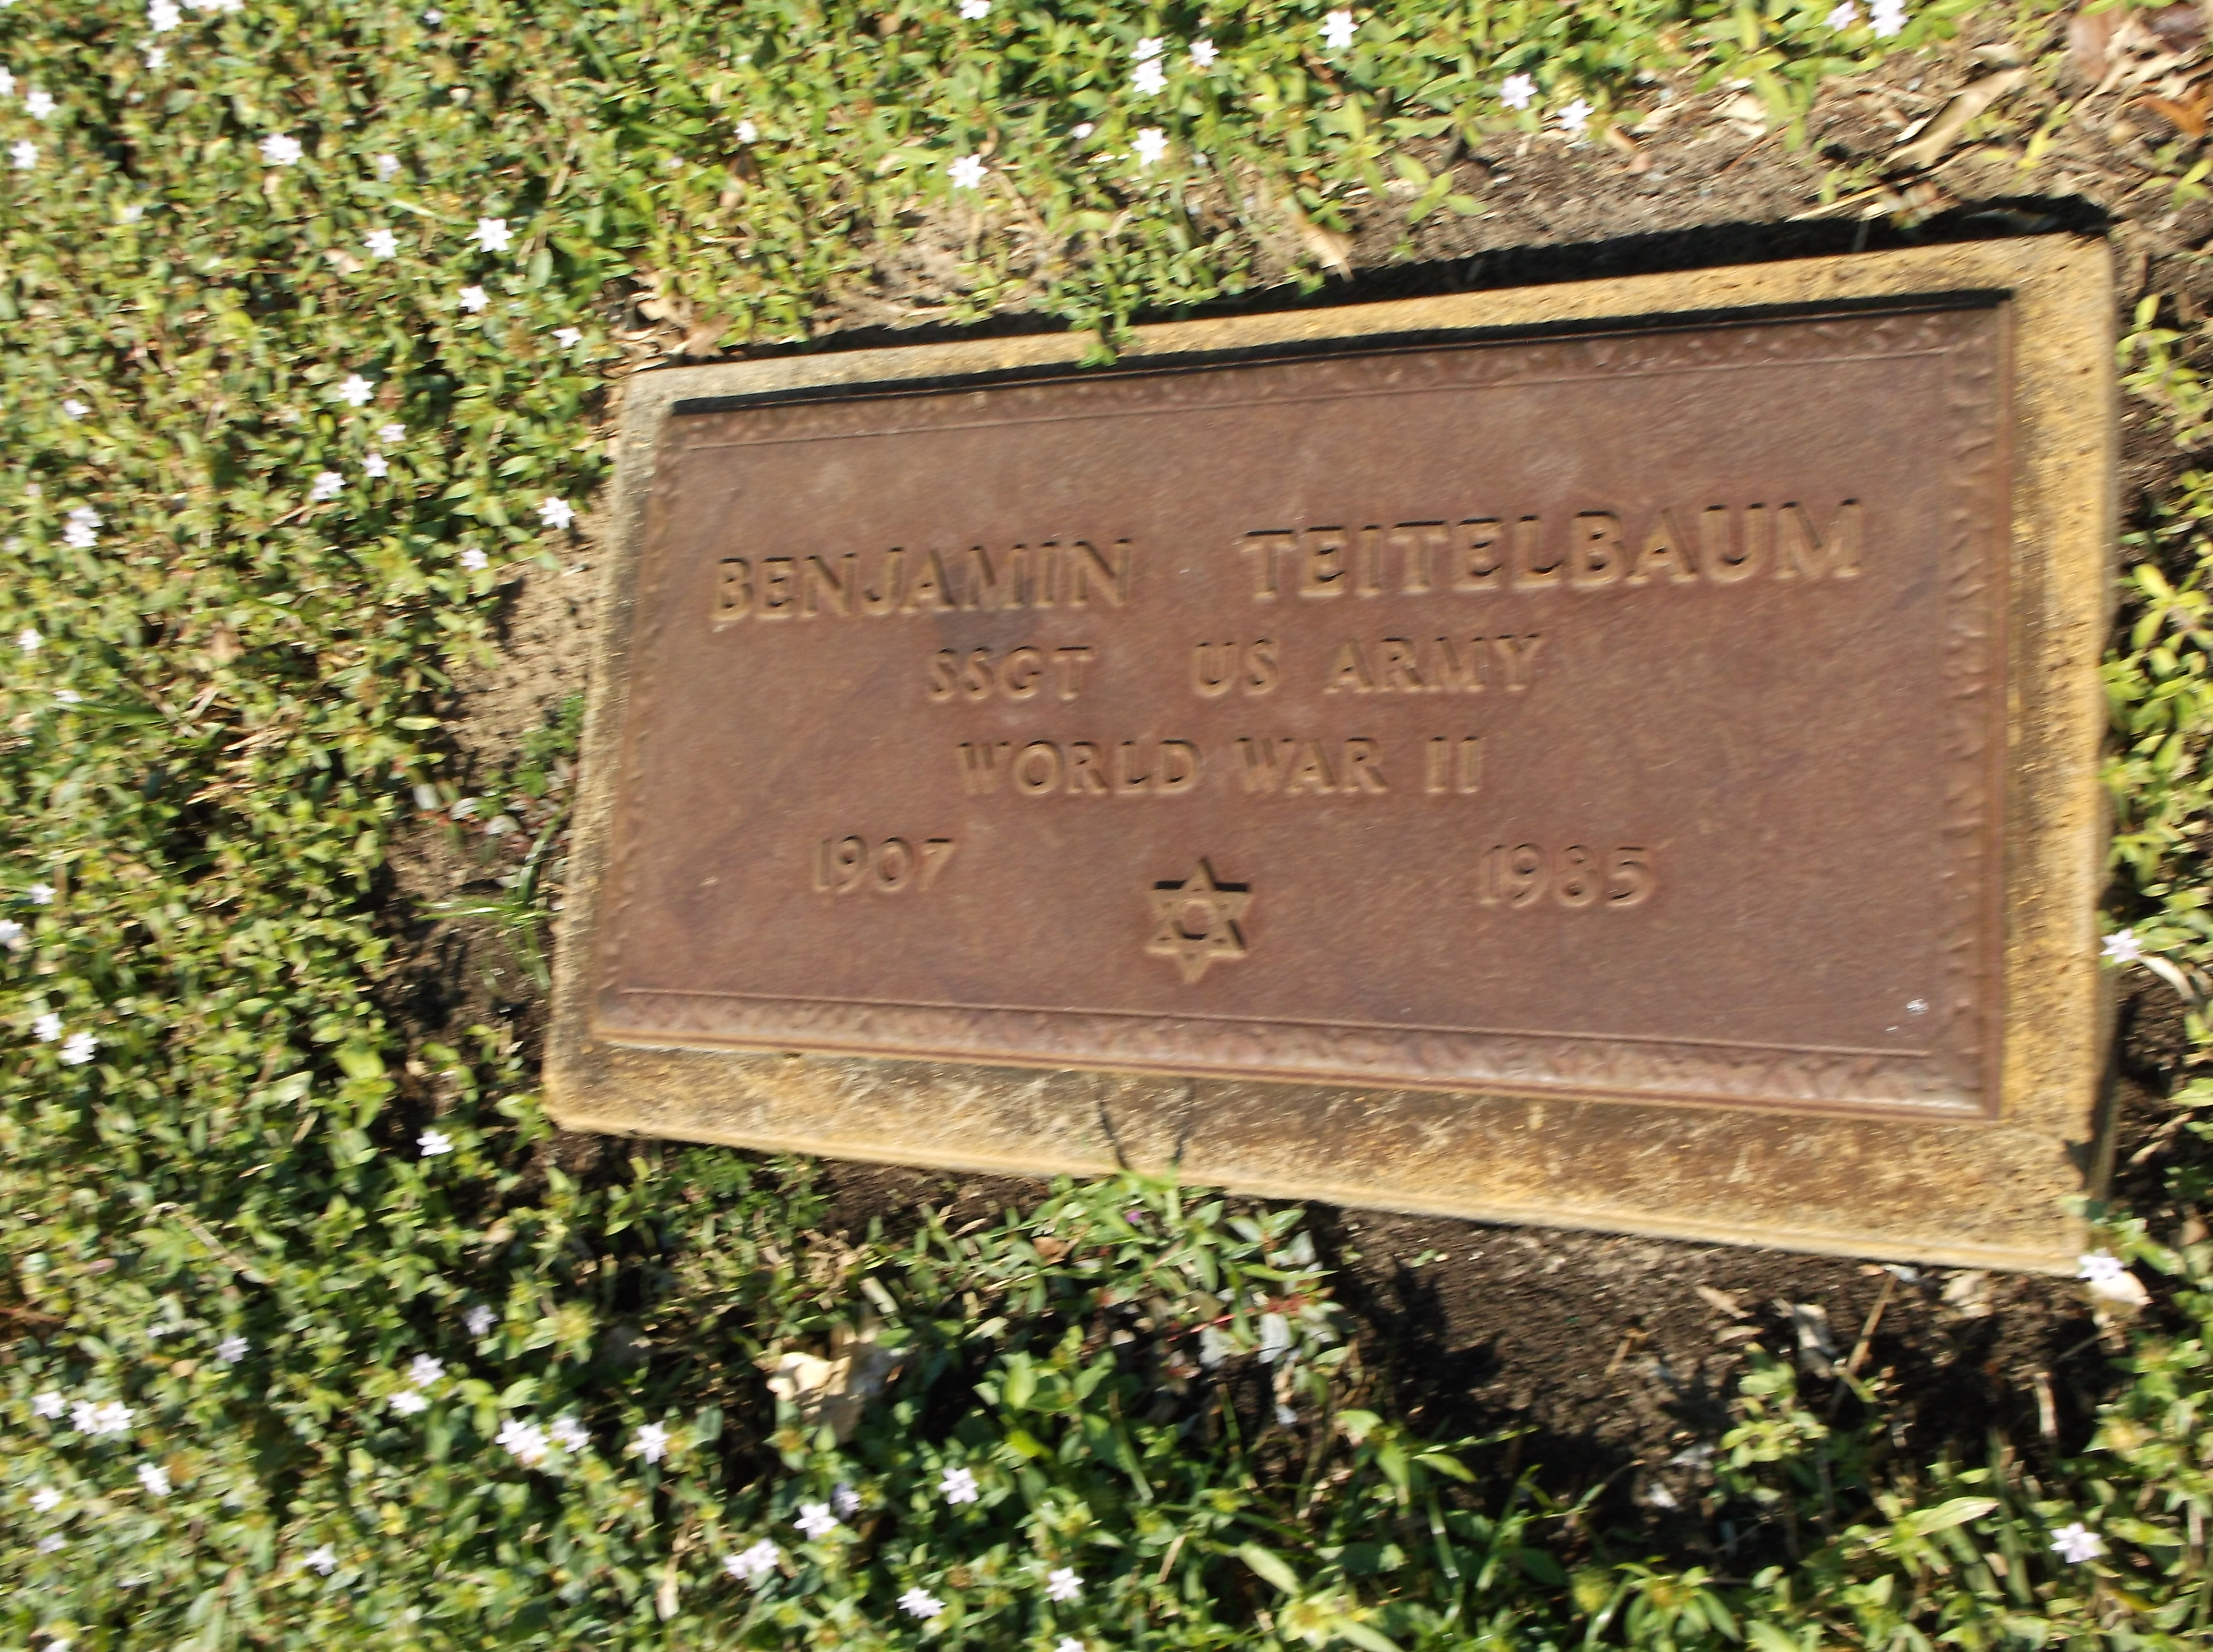 Benjamin Teitelbaum